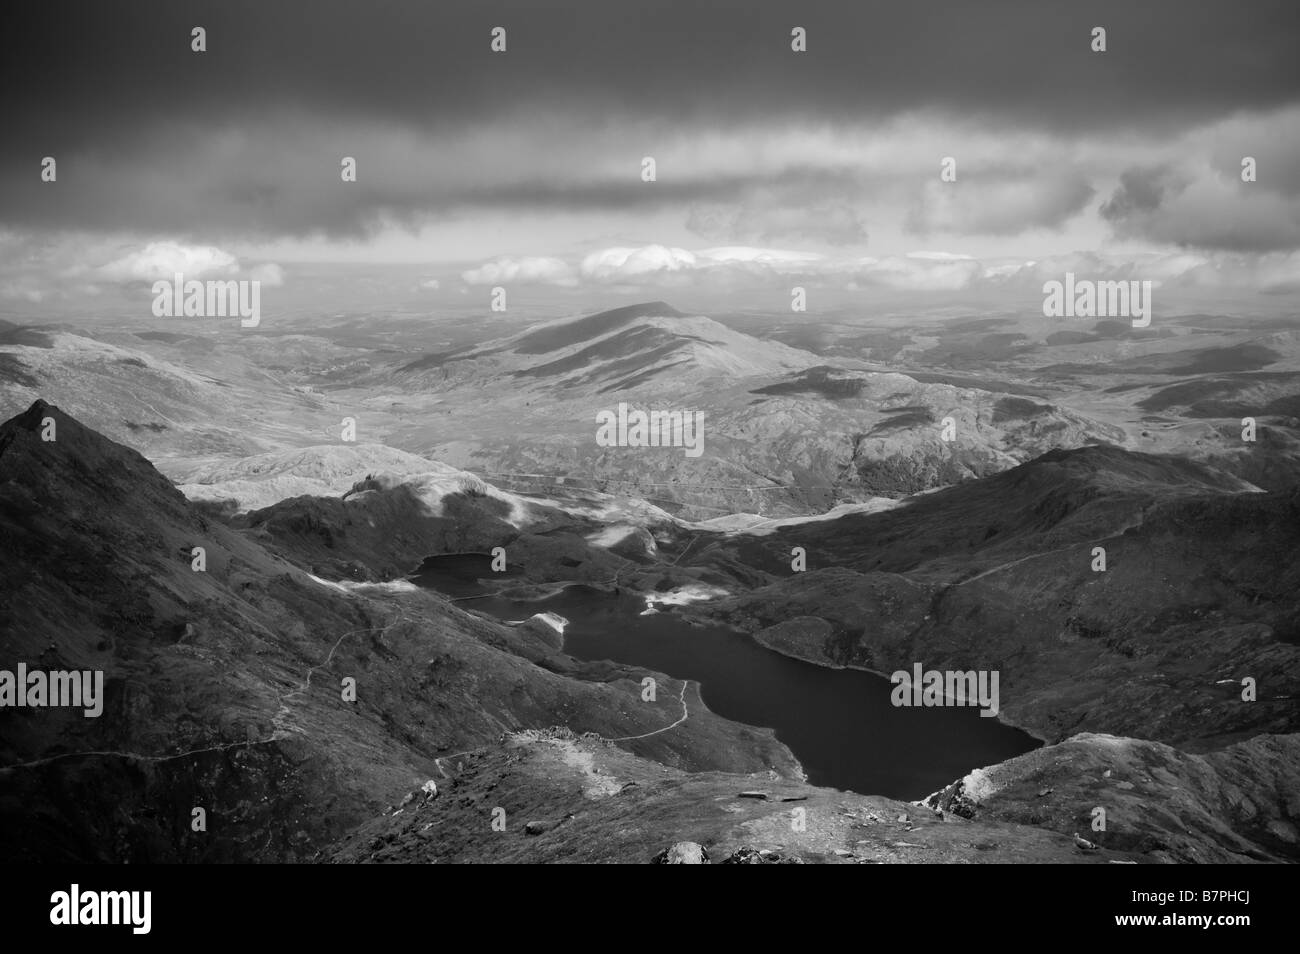 Llyn Llydaw Reservoir view from summit of mount Snowdon Wales Stock Photo